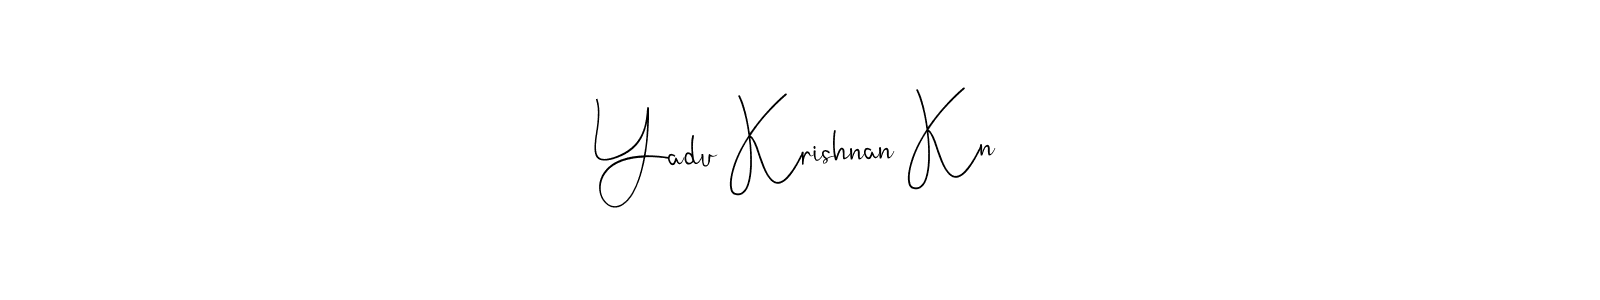 Make a beautiful signature design for name Yadu Krishnan Kn. Use this online signature maker to create a handwritten signature for free. Yadu Krishnan Kn signature style 4 images and pictures png